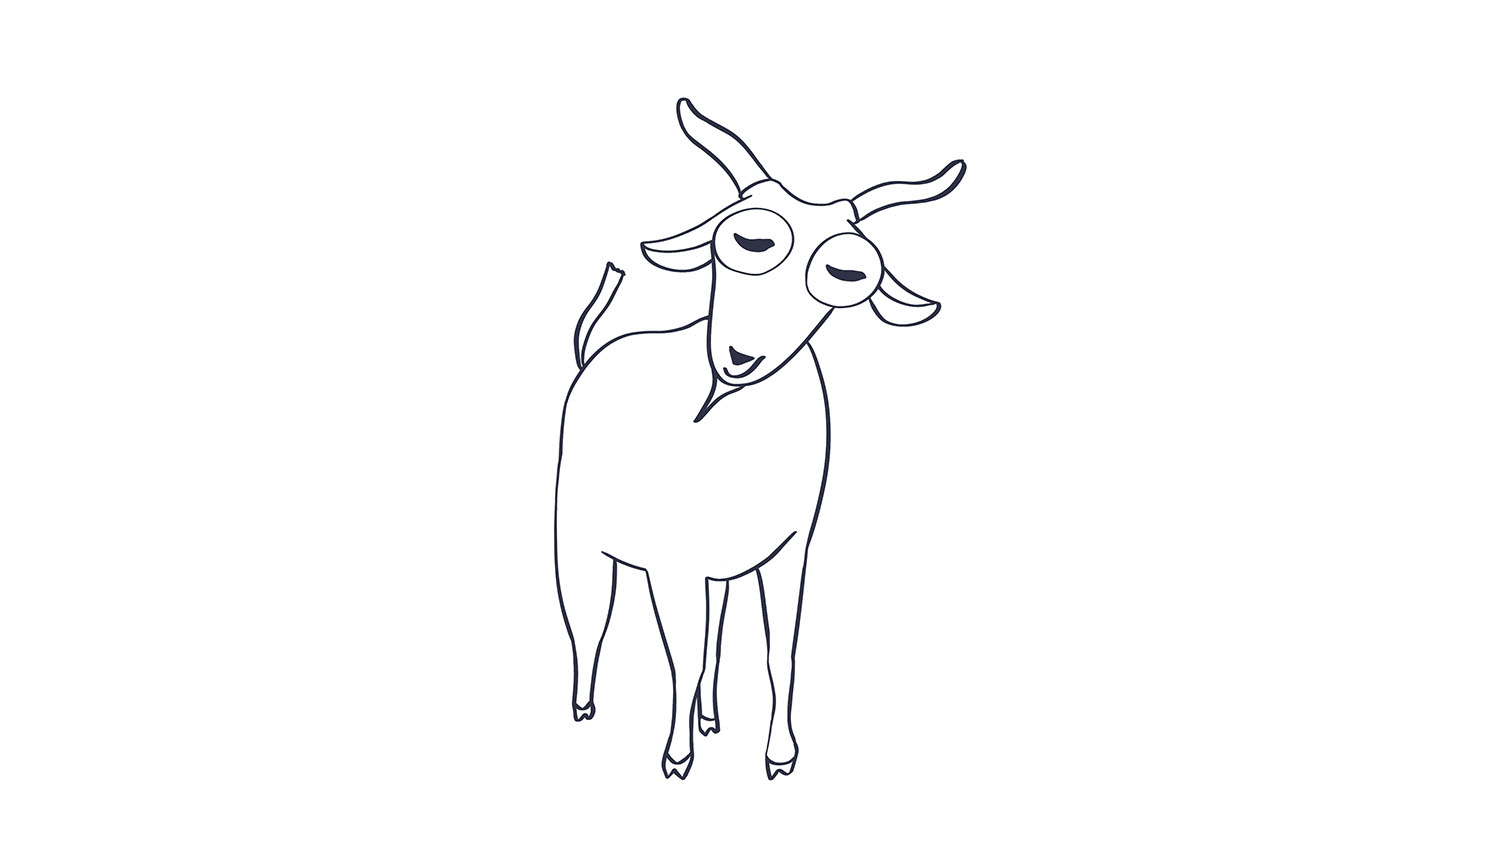 69. Chivo / Goat. 103dibujos